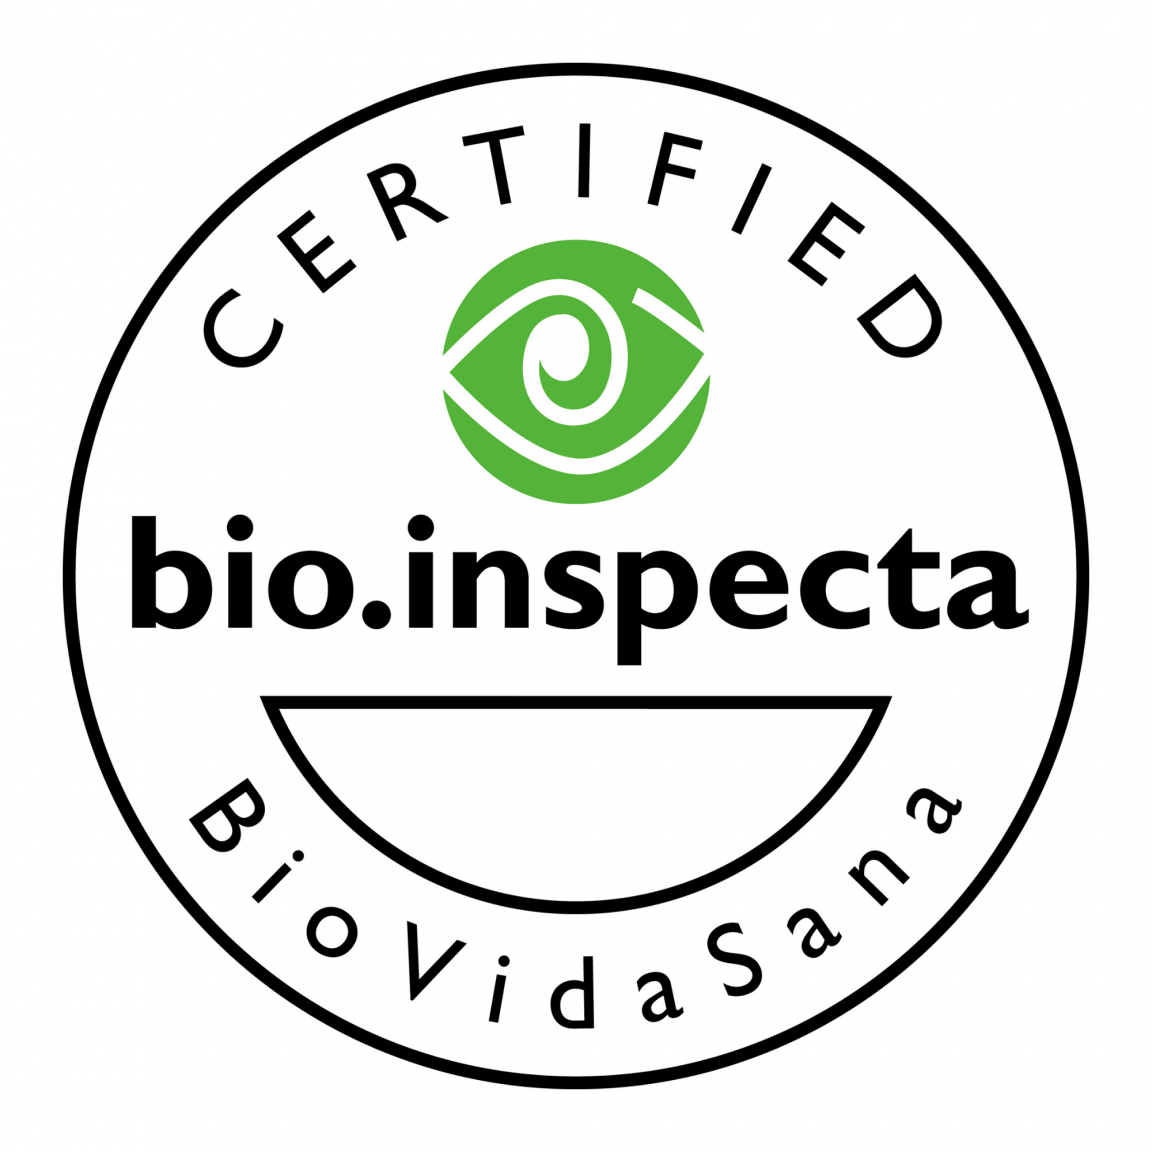 CERTIFIED bio.inspecta BioVidaSana